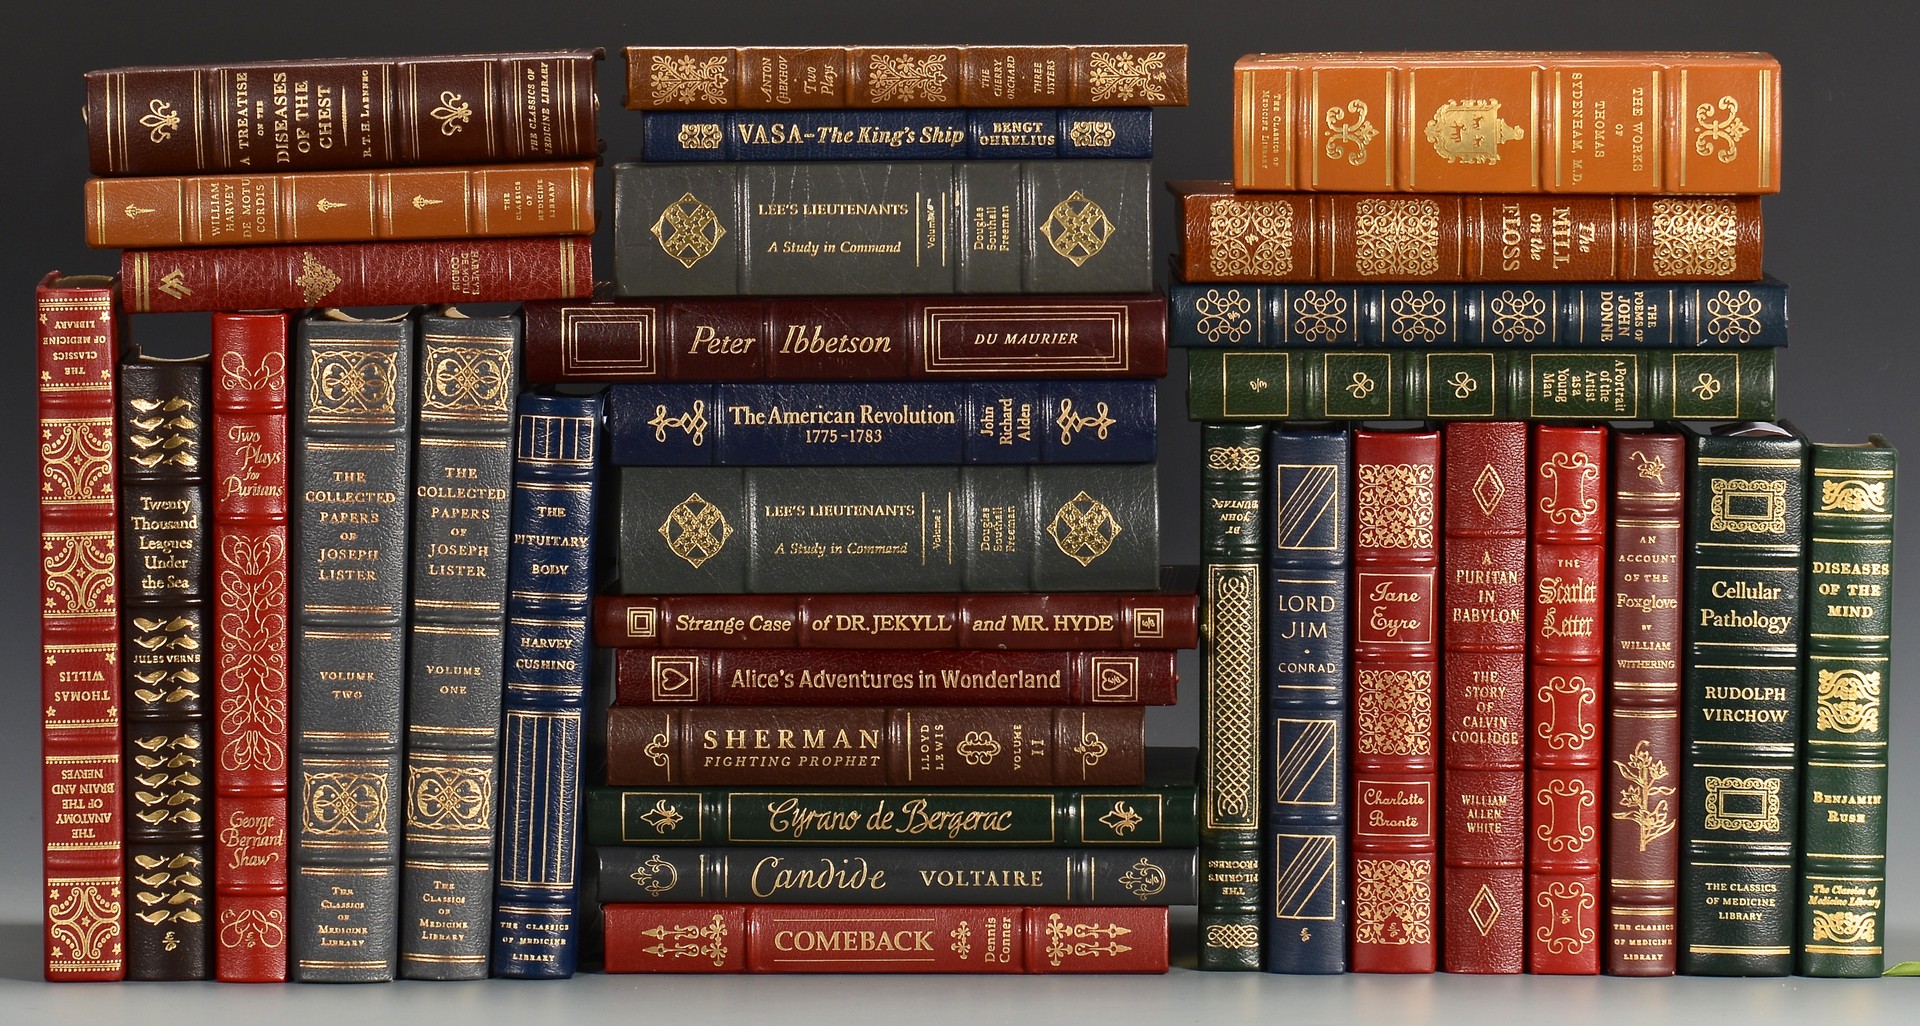 Lot 740: 33 Easton Press Books, incuding Classics of Medicine Library